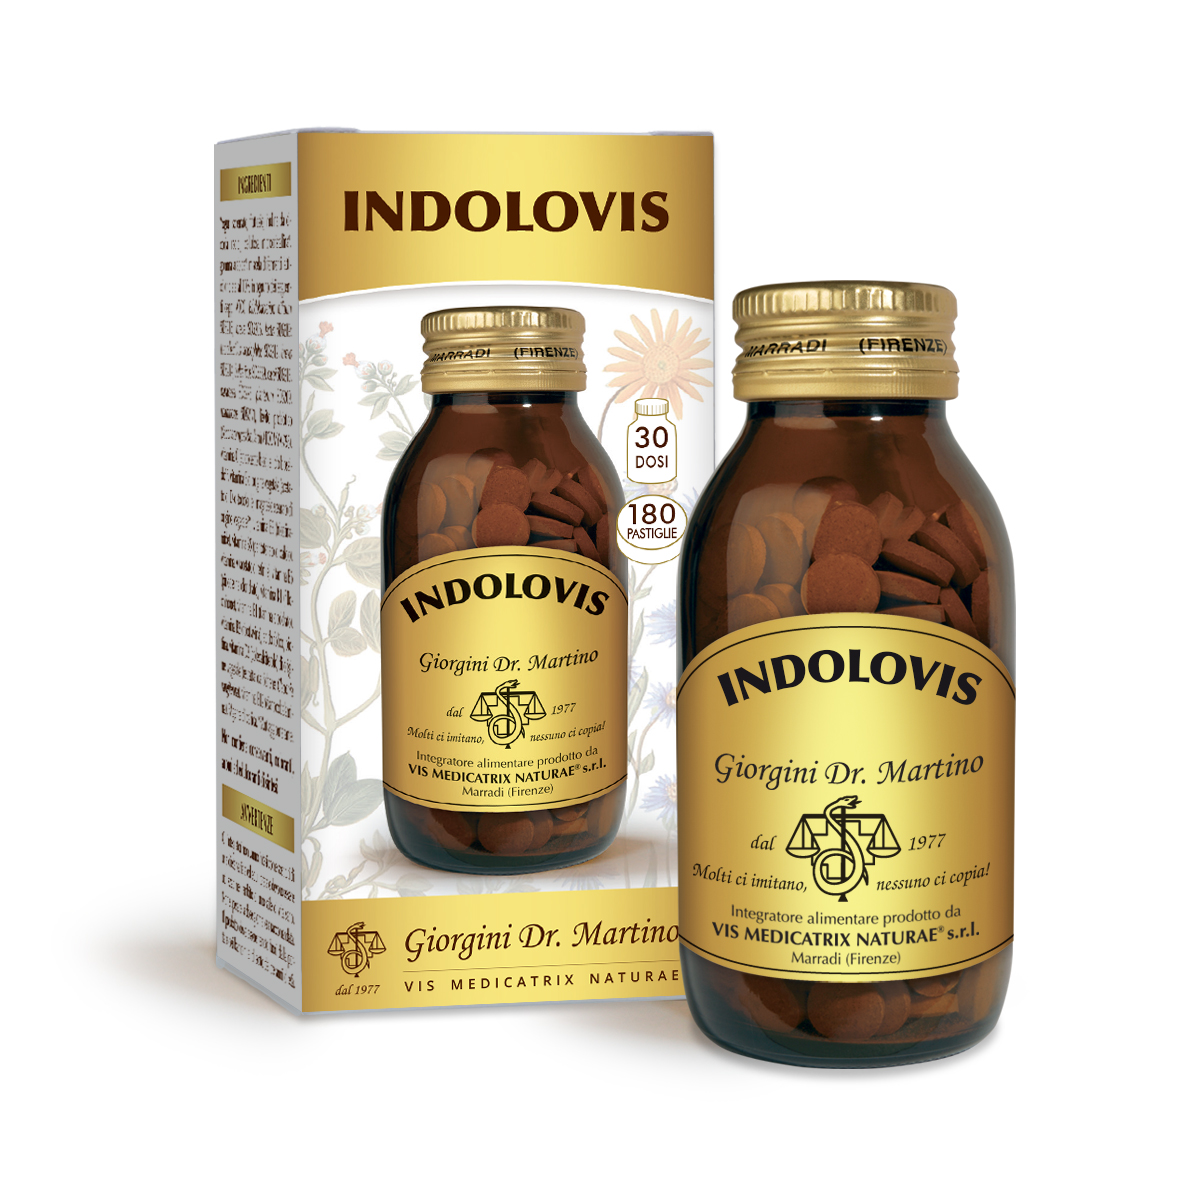  	 INDOLOVIS 90 g - 180 tablets of 500 mg